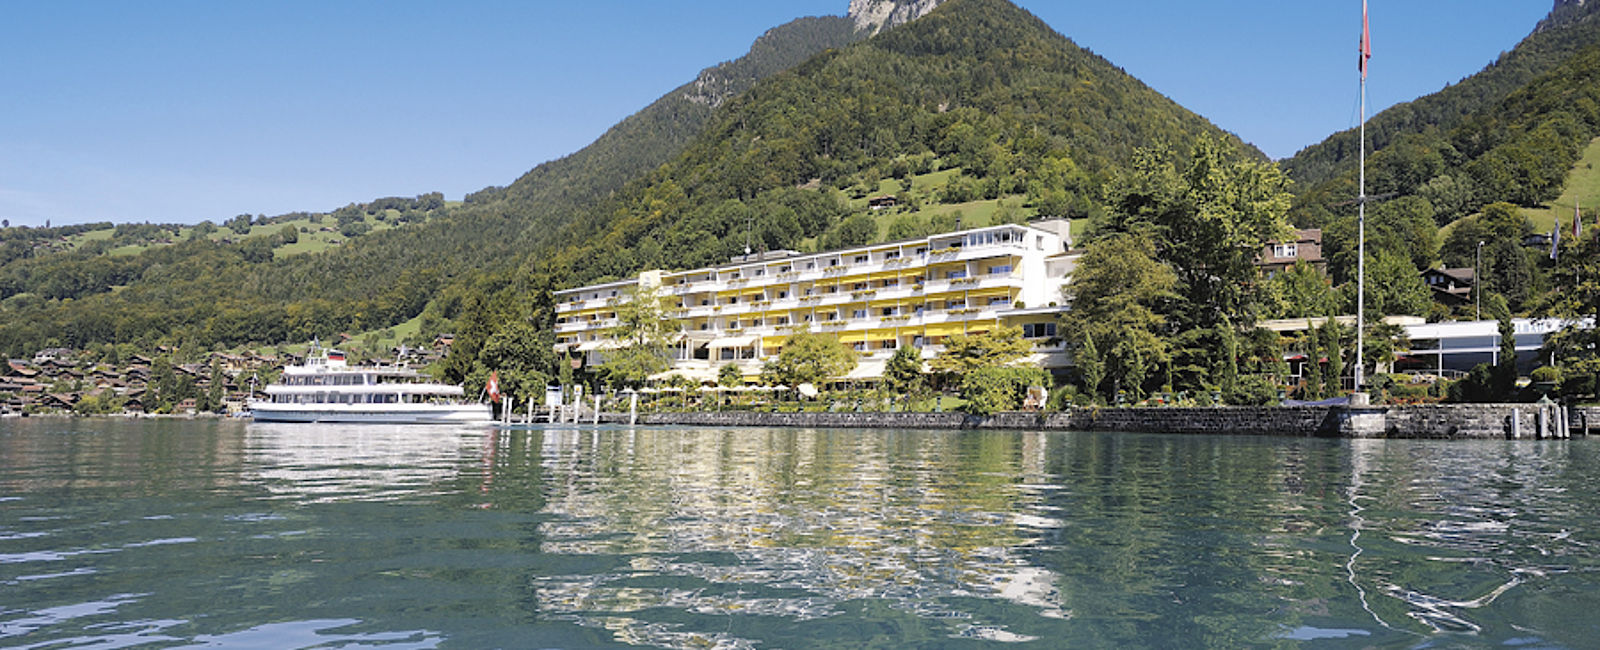 HOTEL TIPPS
 Wellnes- & Spa-Hotel Beatus 
 Das Wunder bei Bern 